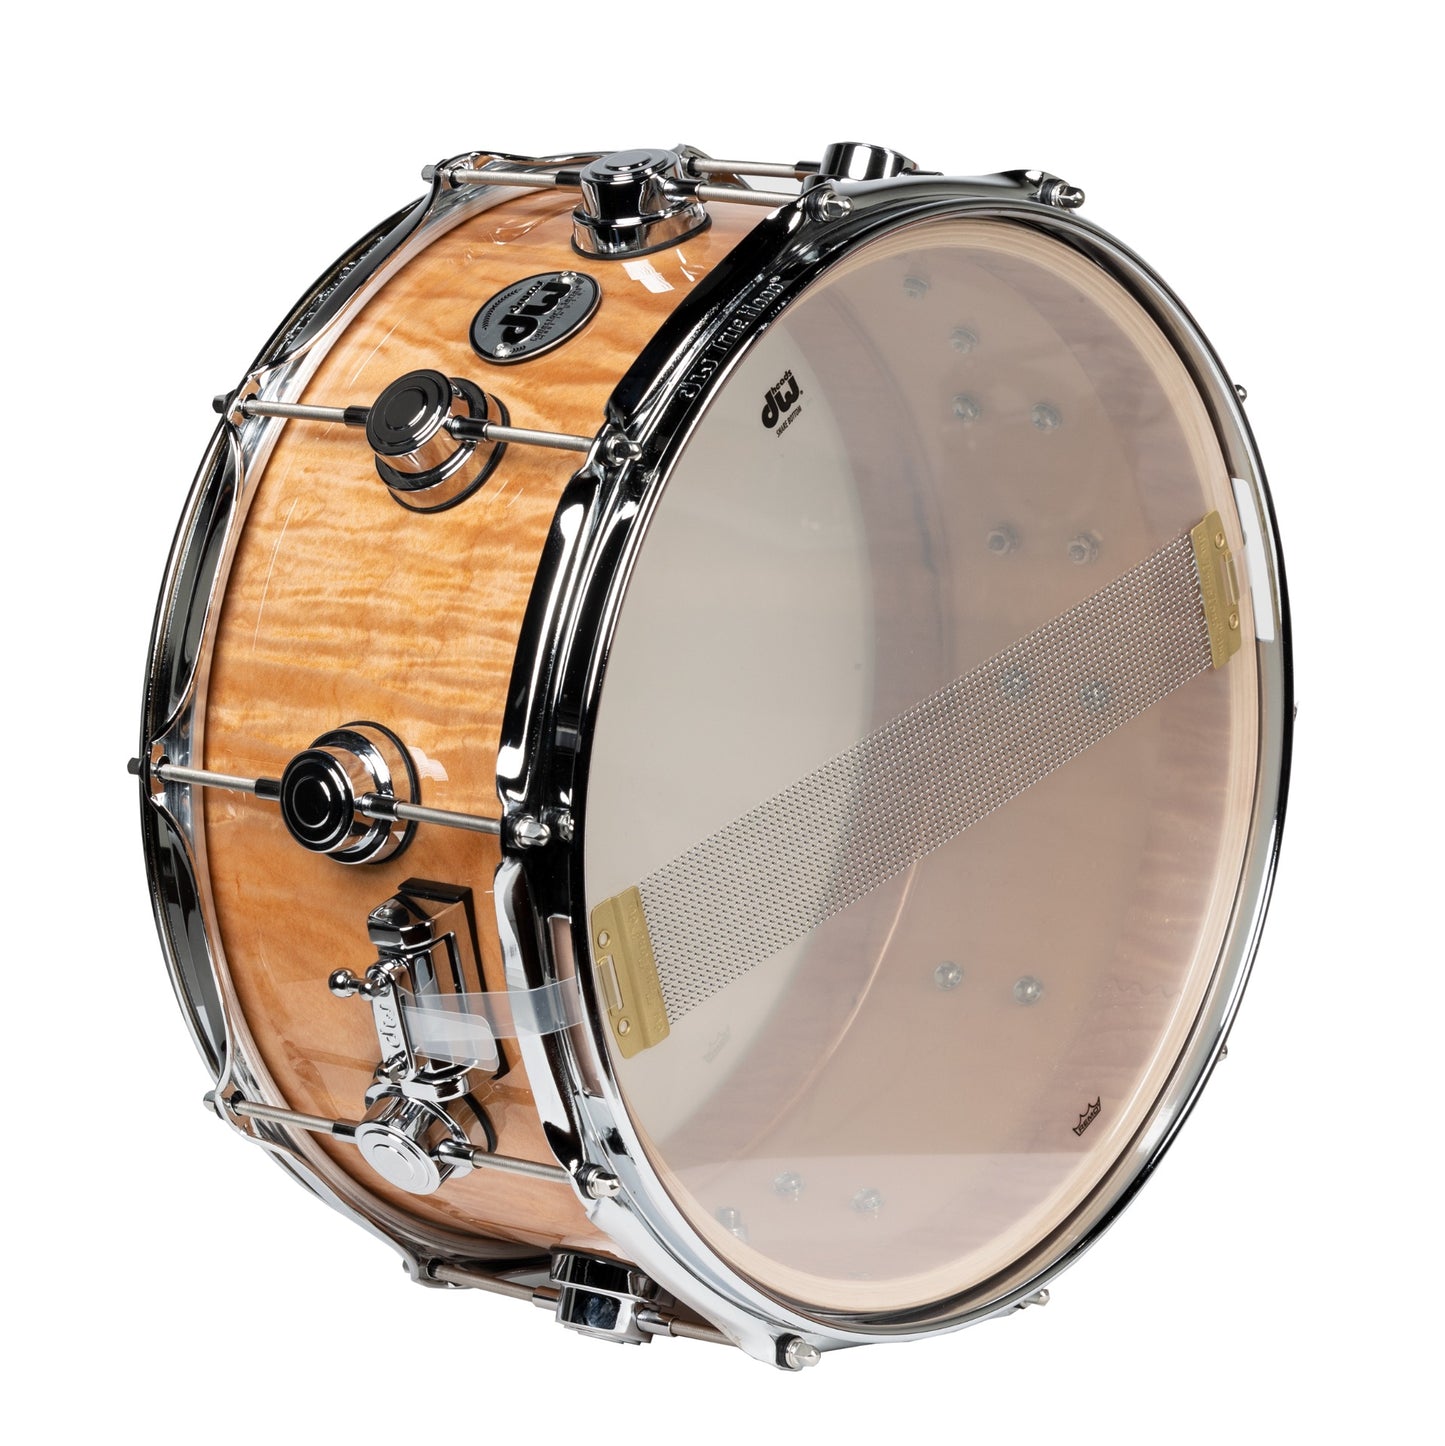 Drum Workshop Collectors Series 6.5x14 Snare Drum - Natural Super Curly Maple